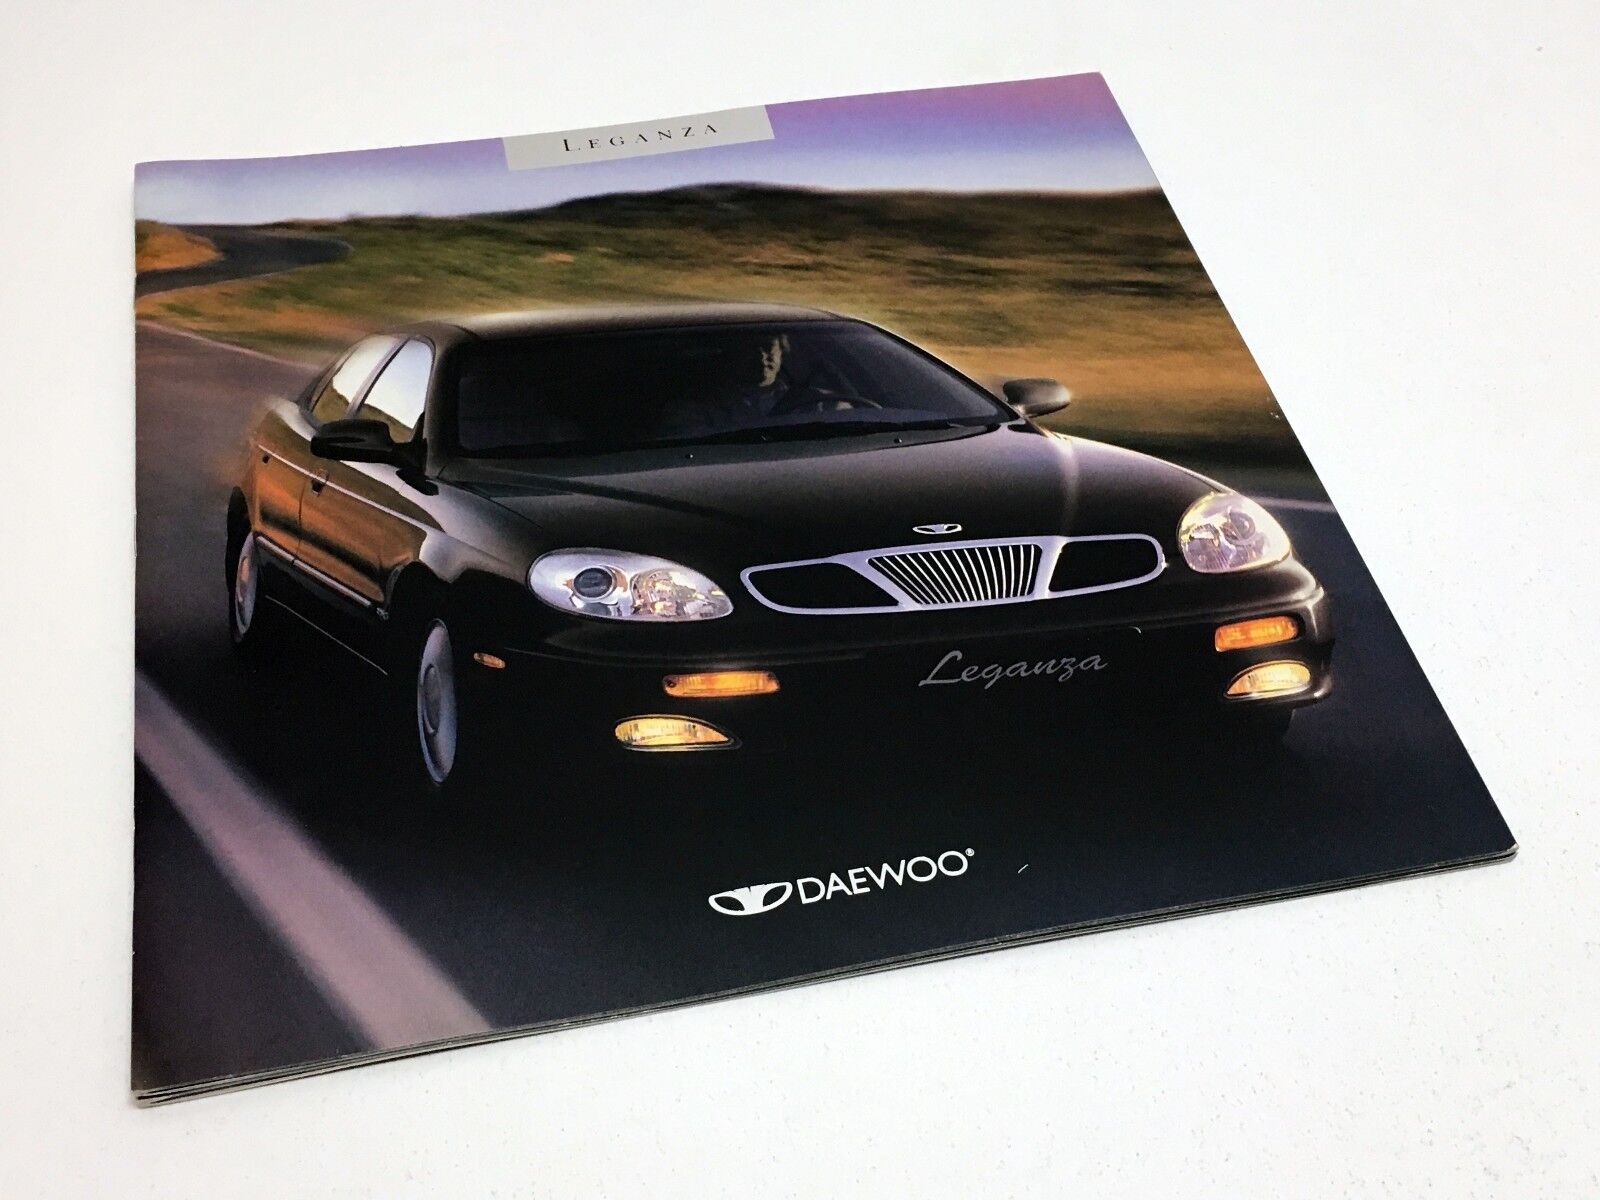 2000 Daewoo Leganza Brochure | eBay